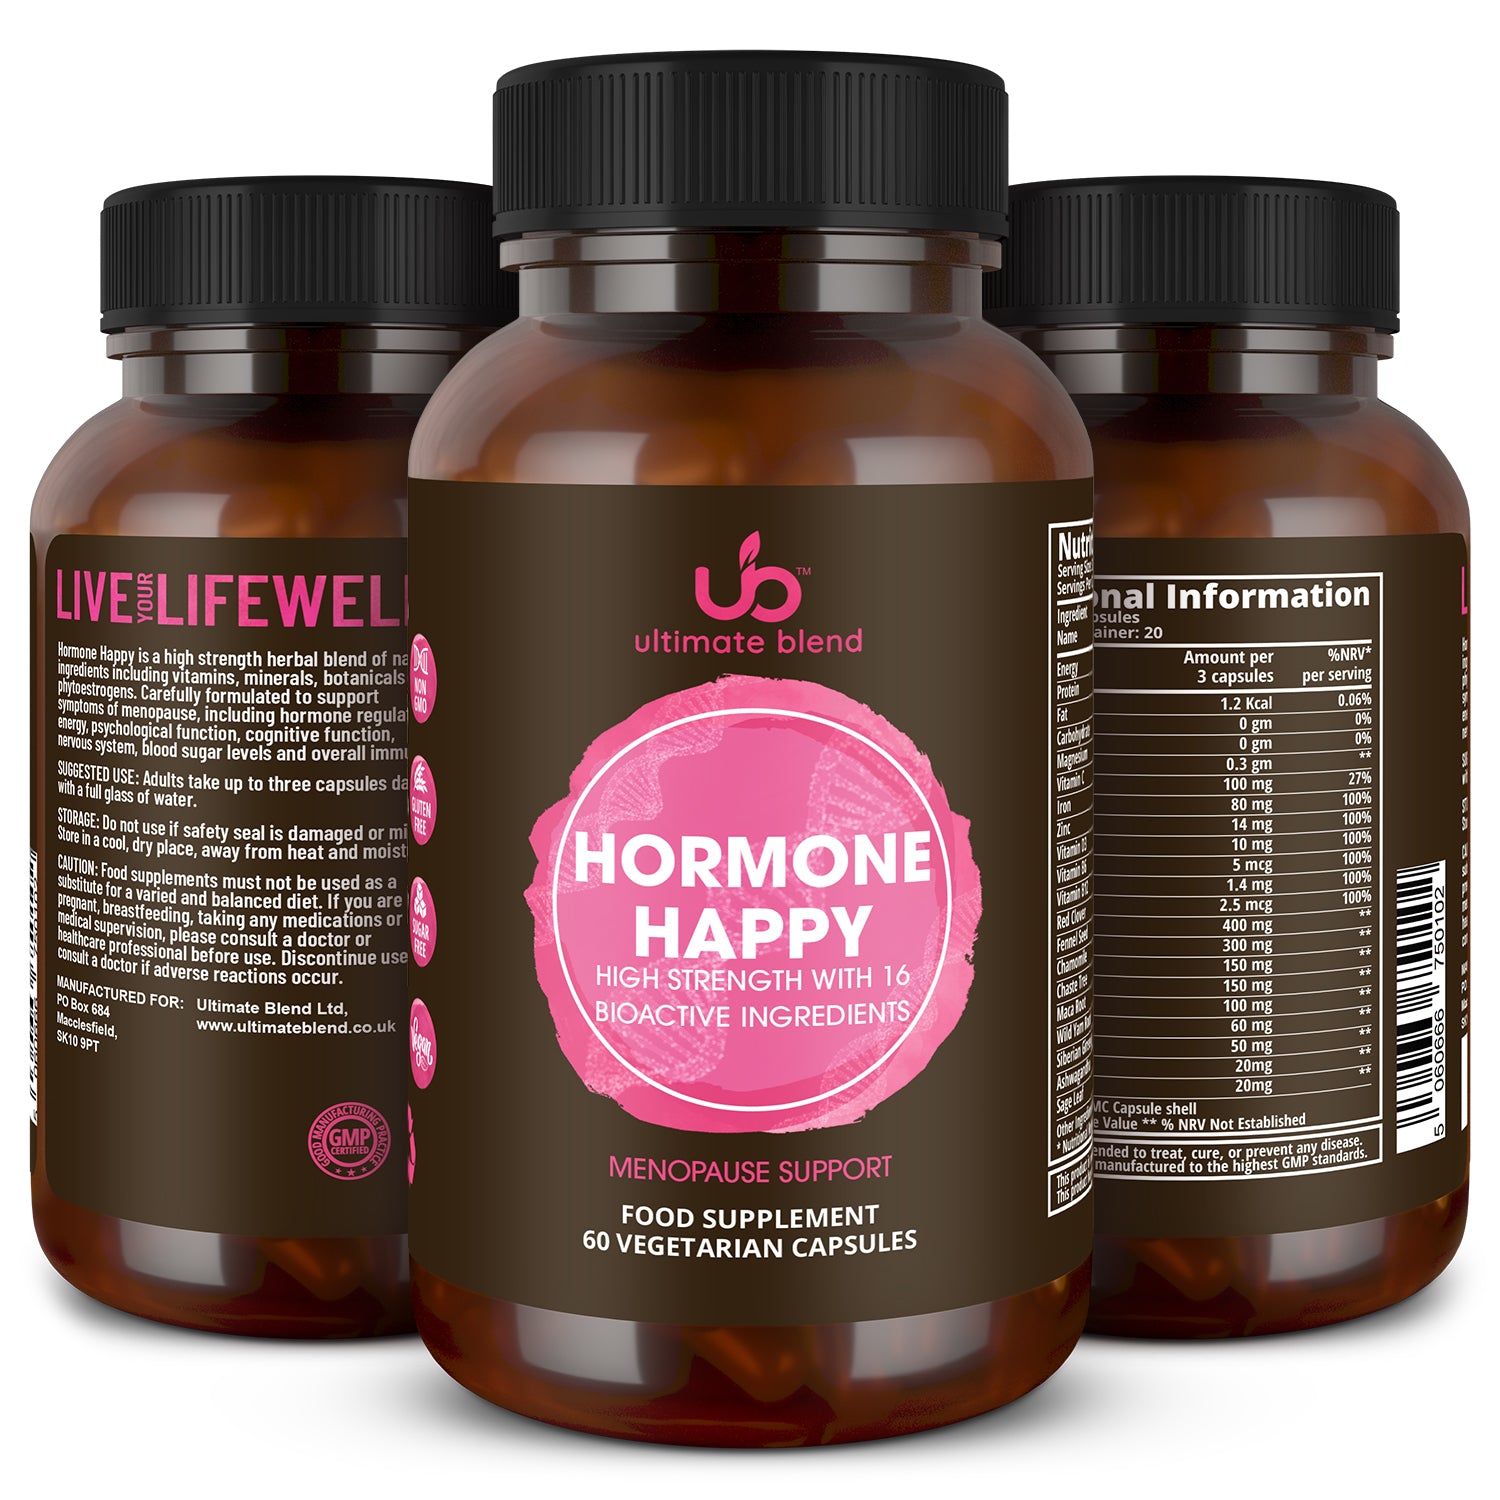 Hormone Happy High Strength with 16 Bioactive Ingredients